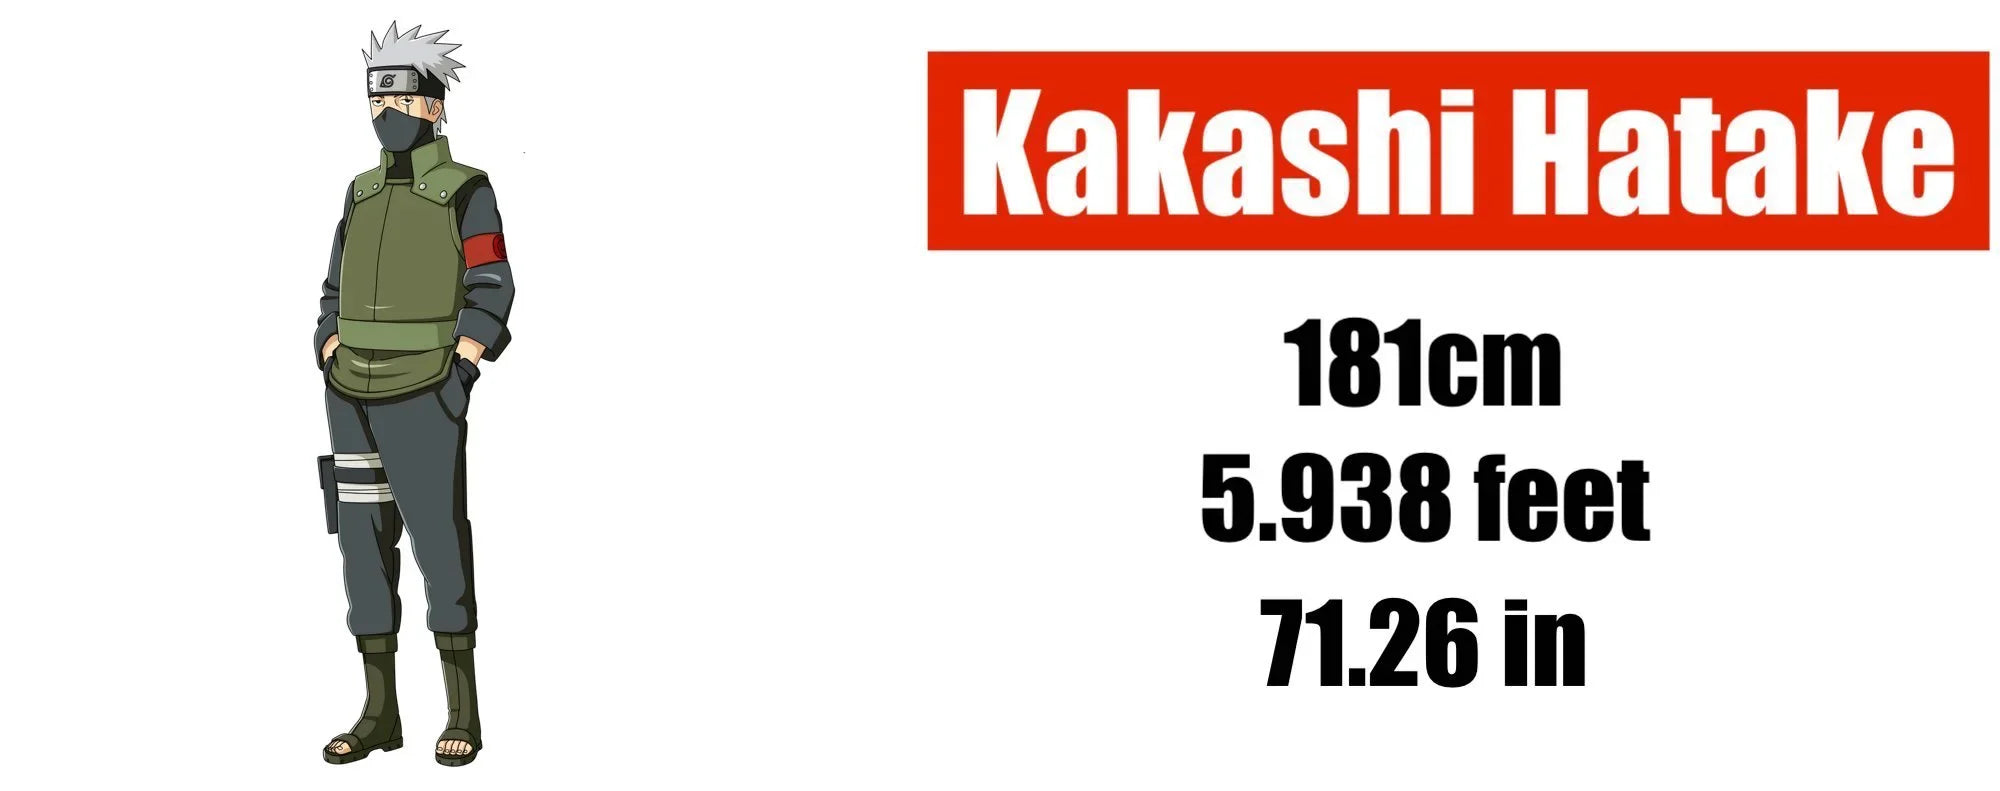 How tall is Kakashi?